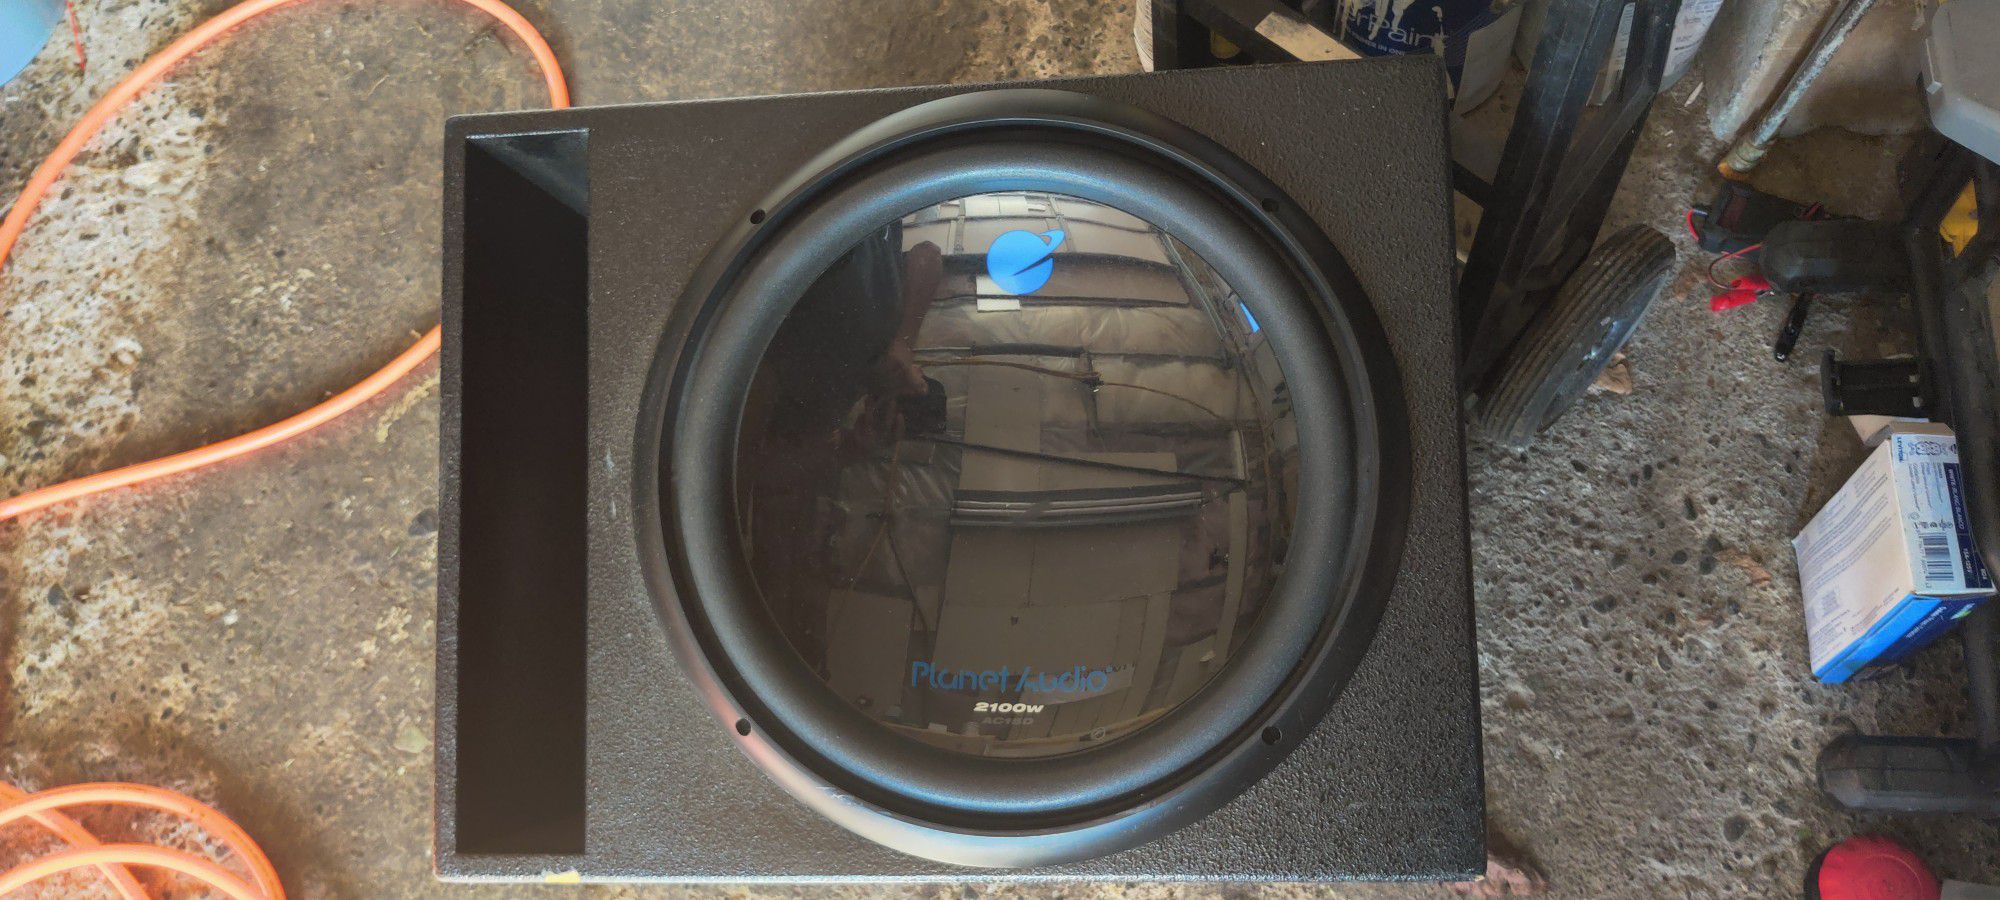 Planet Audio 15 Inch Speaker. Price 350 